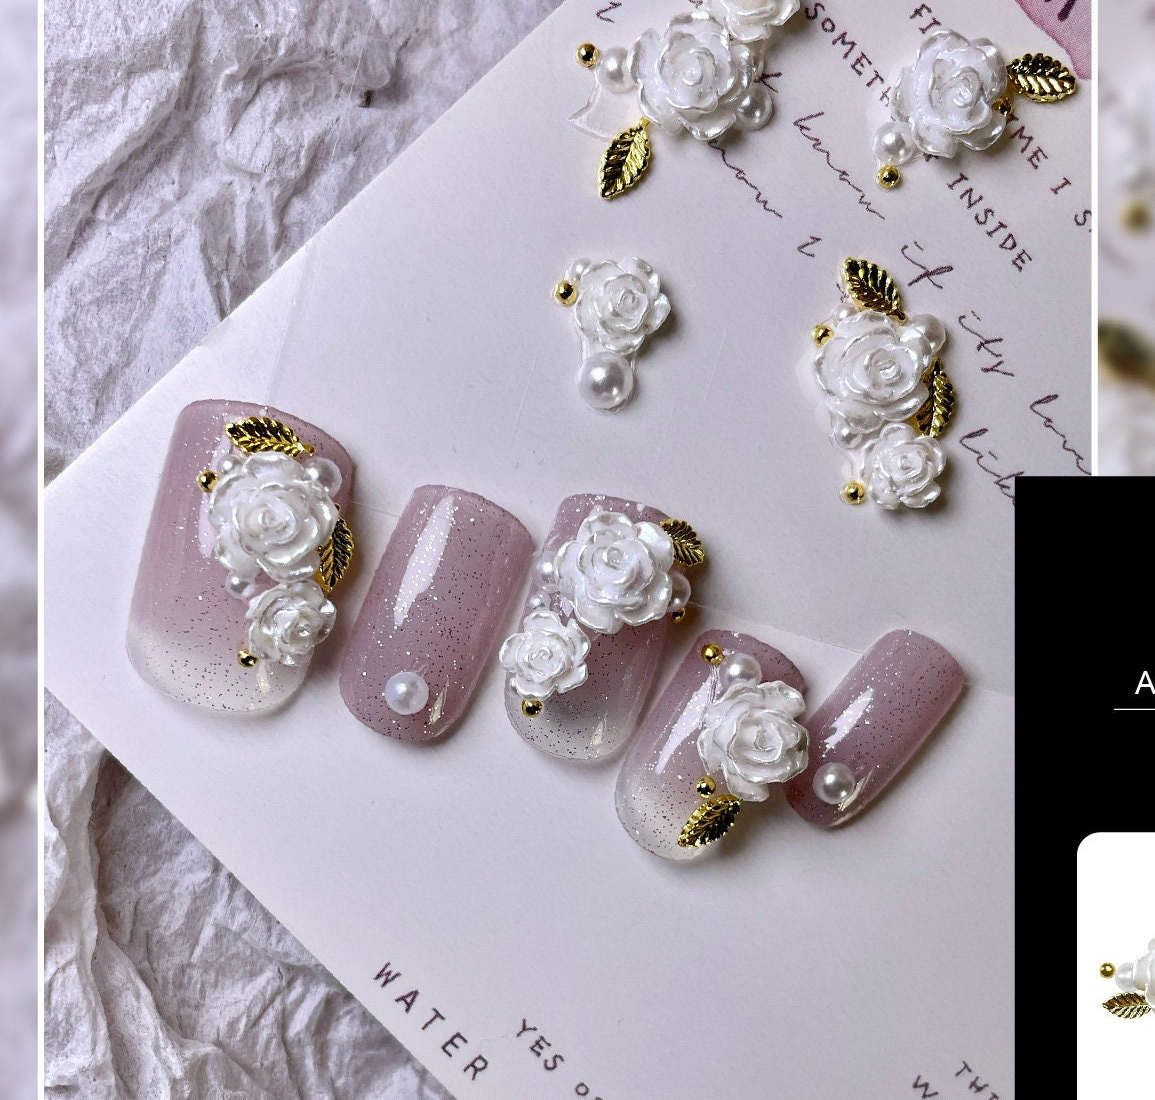 Kids Acrylic Gem Stickers 3D Rose Flower Star Rhinestone Diamond Earrings  Sticker Children Girls DIY Handmade Decoration Gifts